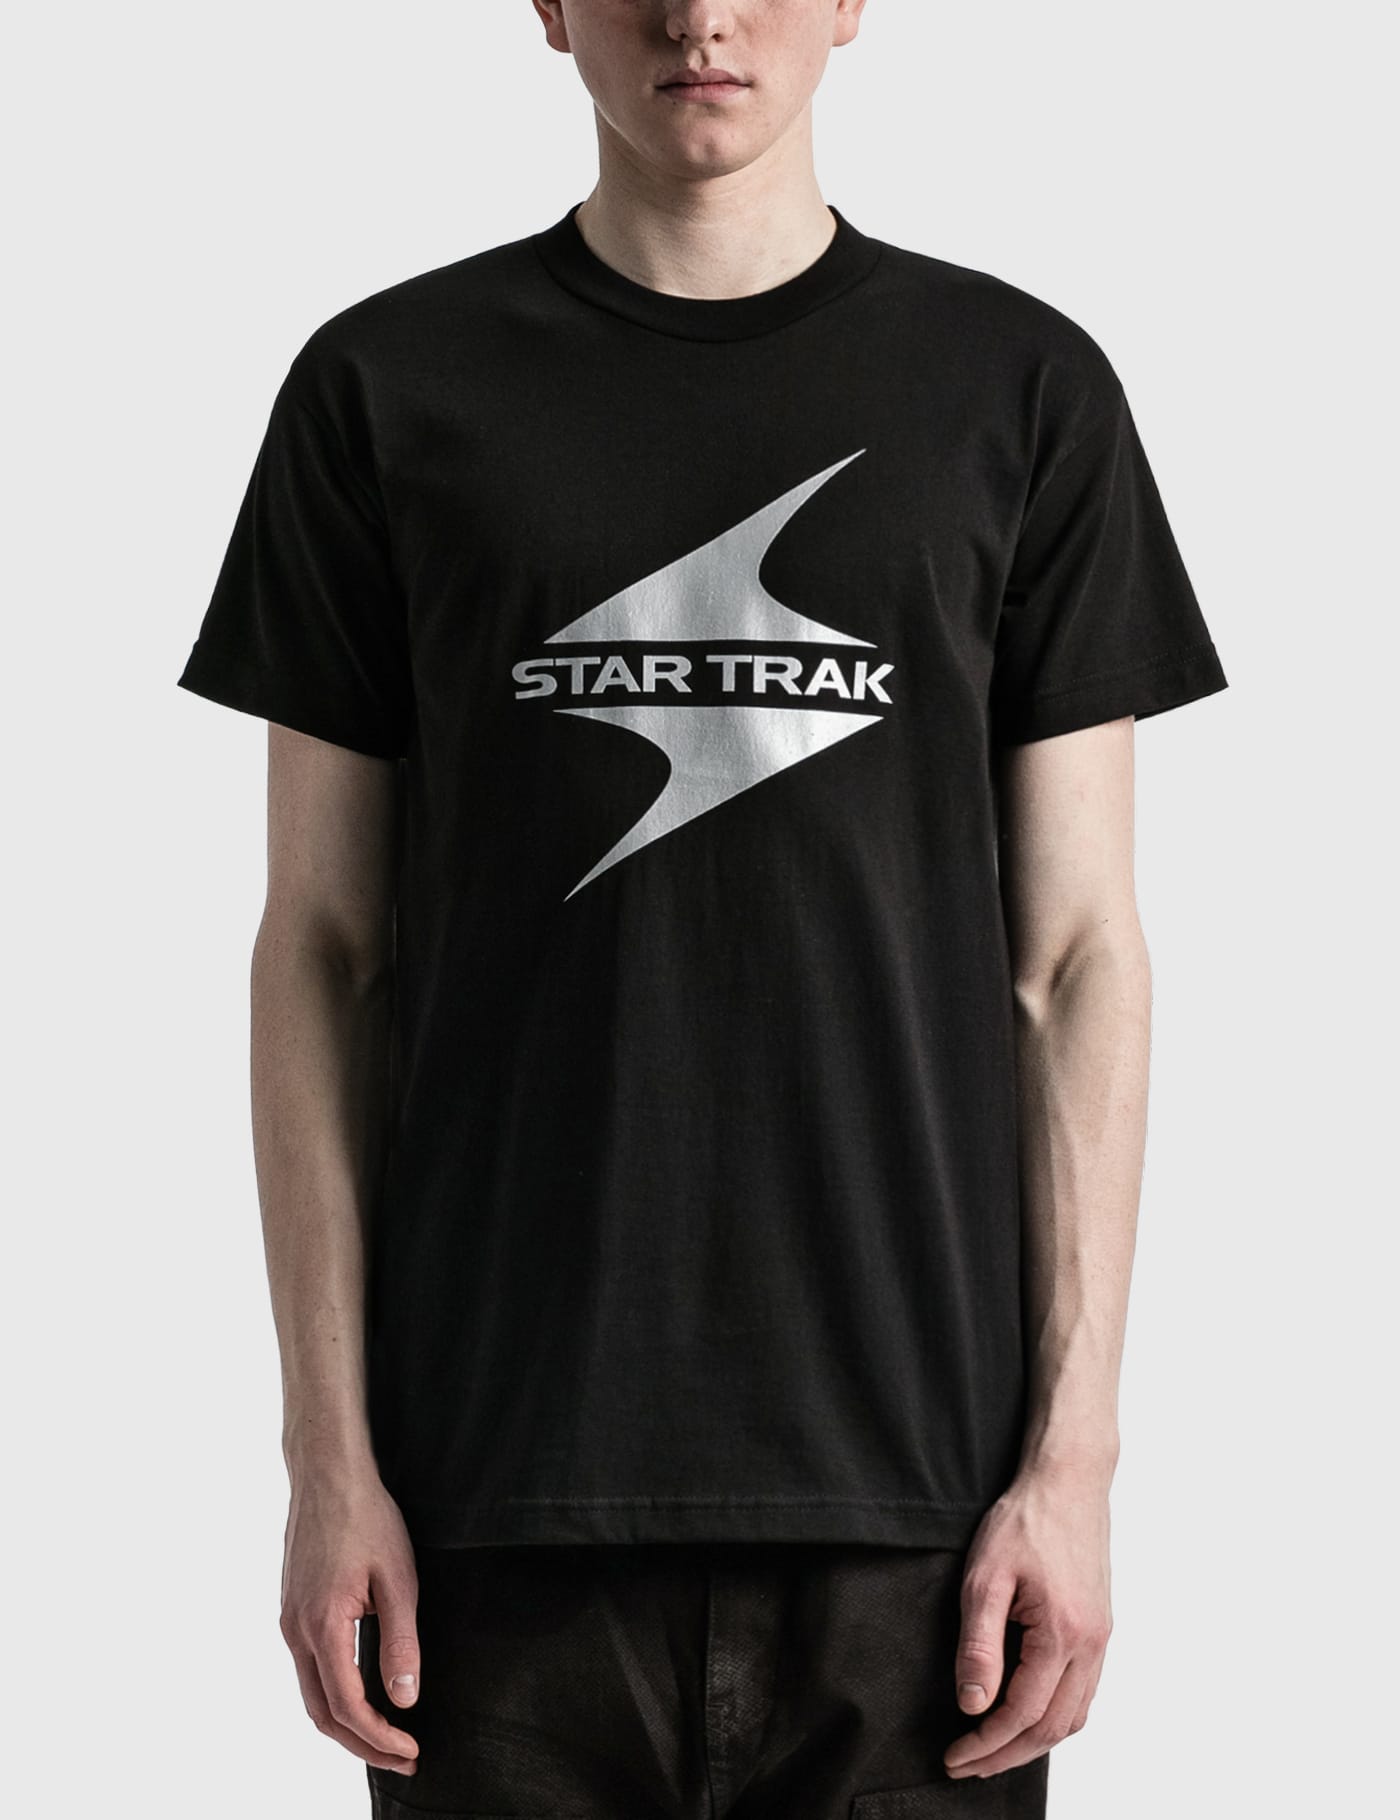 STAR TRAK - Logo T-shirt | HBX - Globally Curated Fashion and 